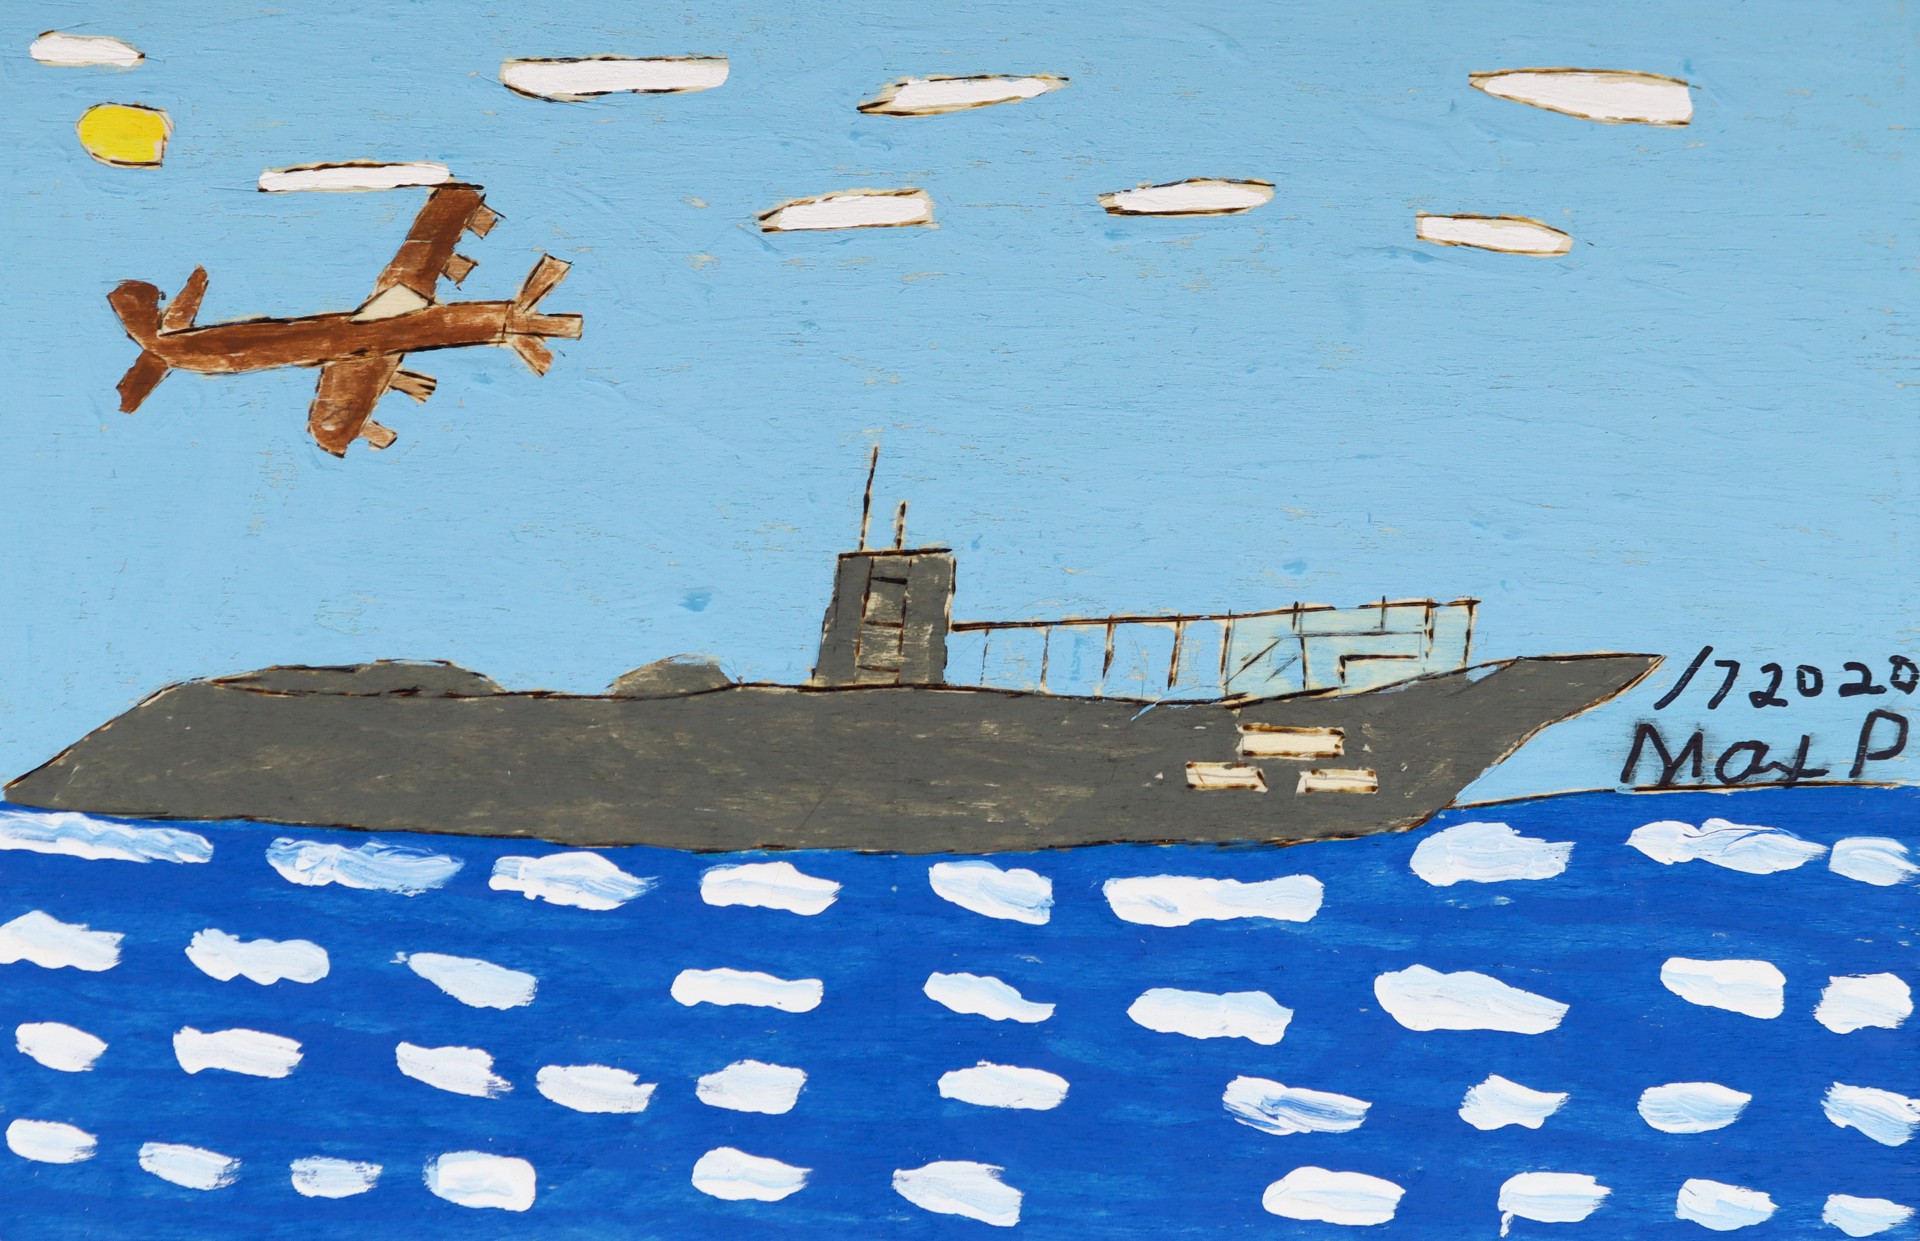 War Ship by Max Poznerzon